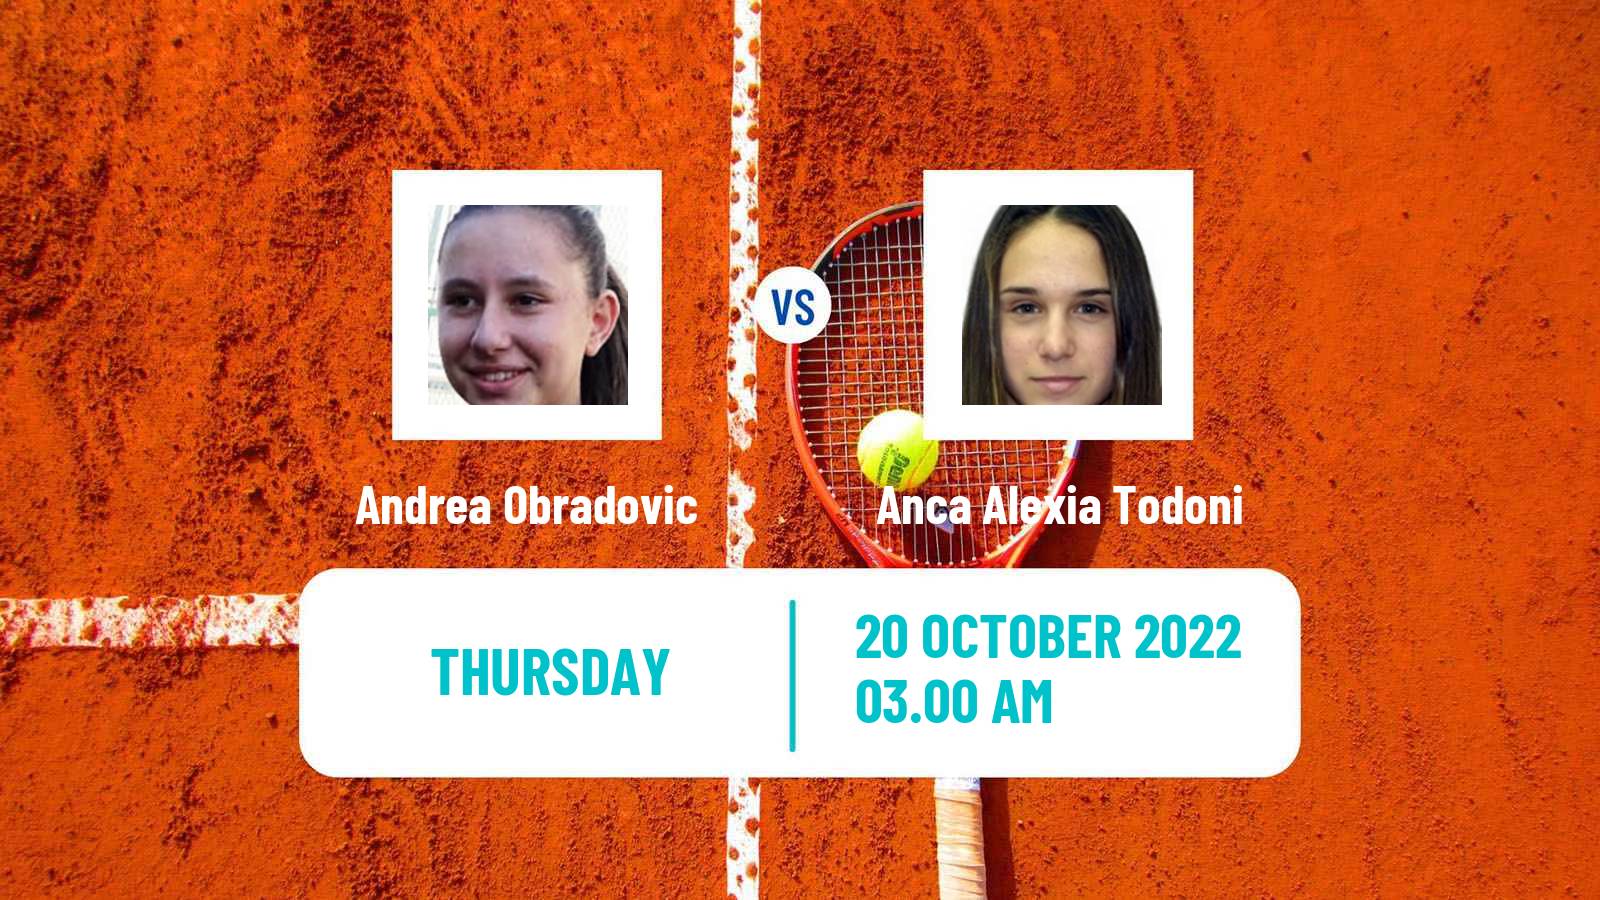 Tennis ITF Tournaments Andrea Obradovic - Anca Alexia Todoni